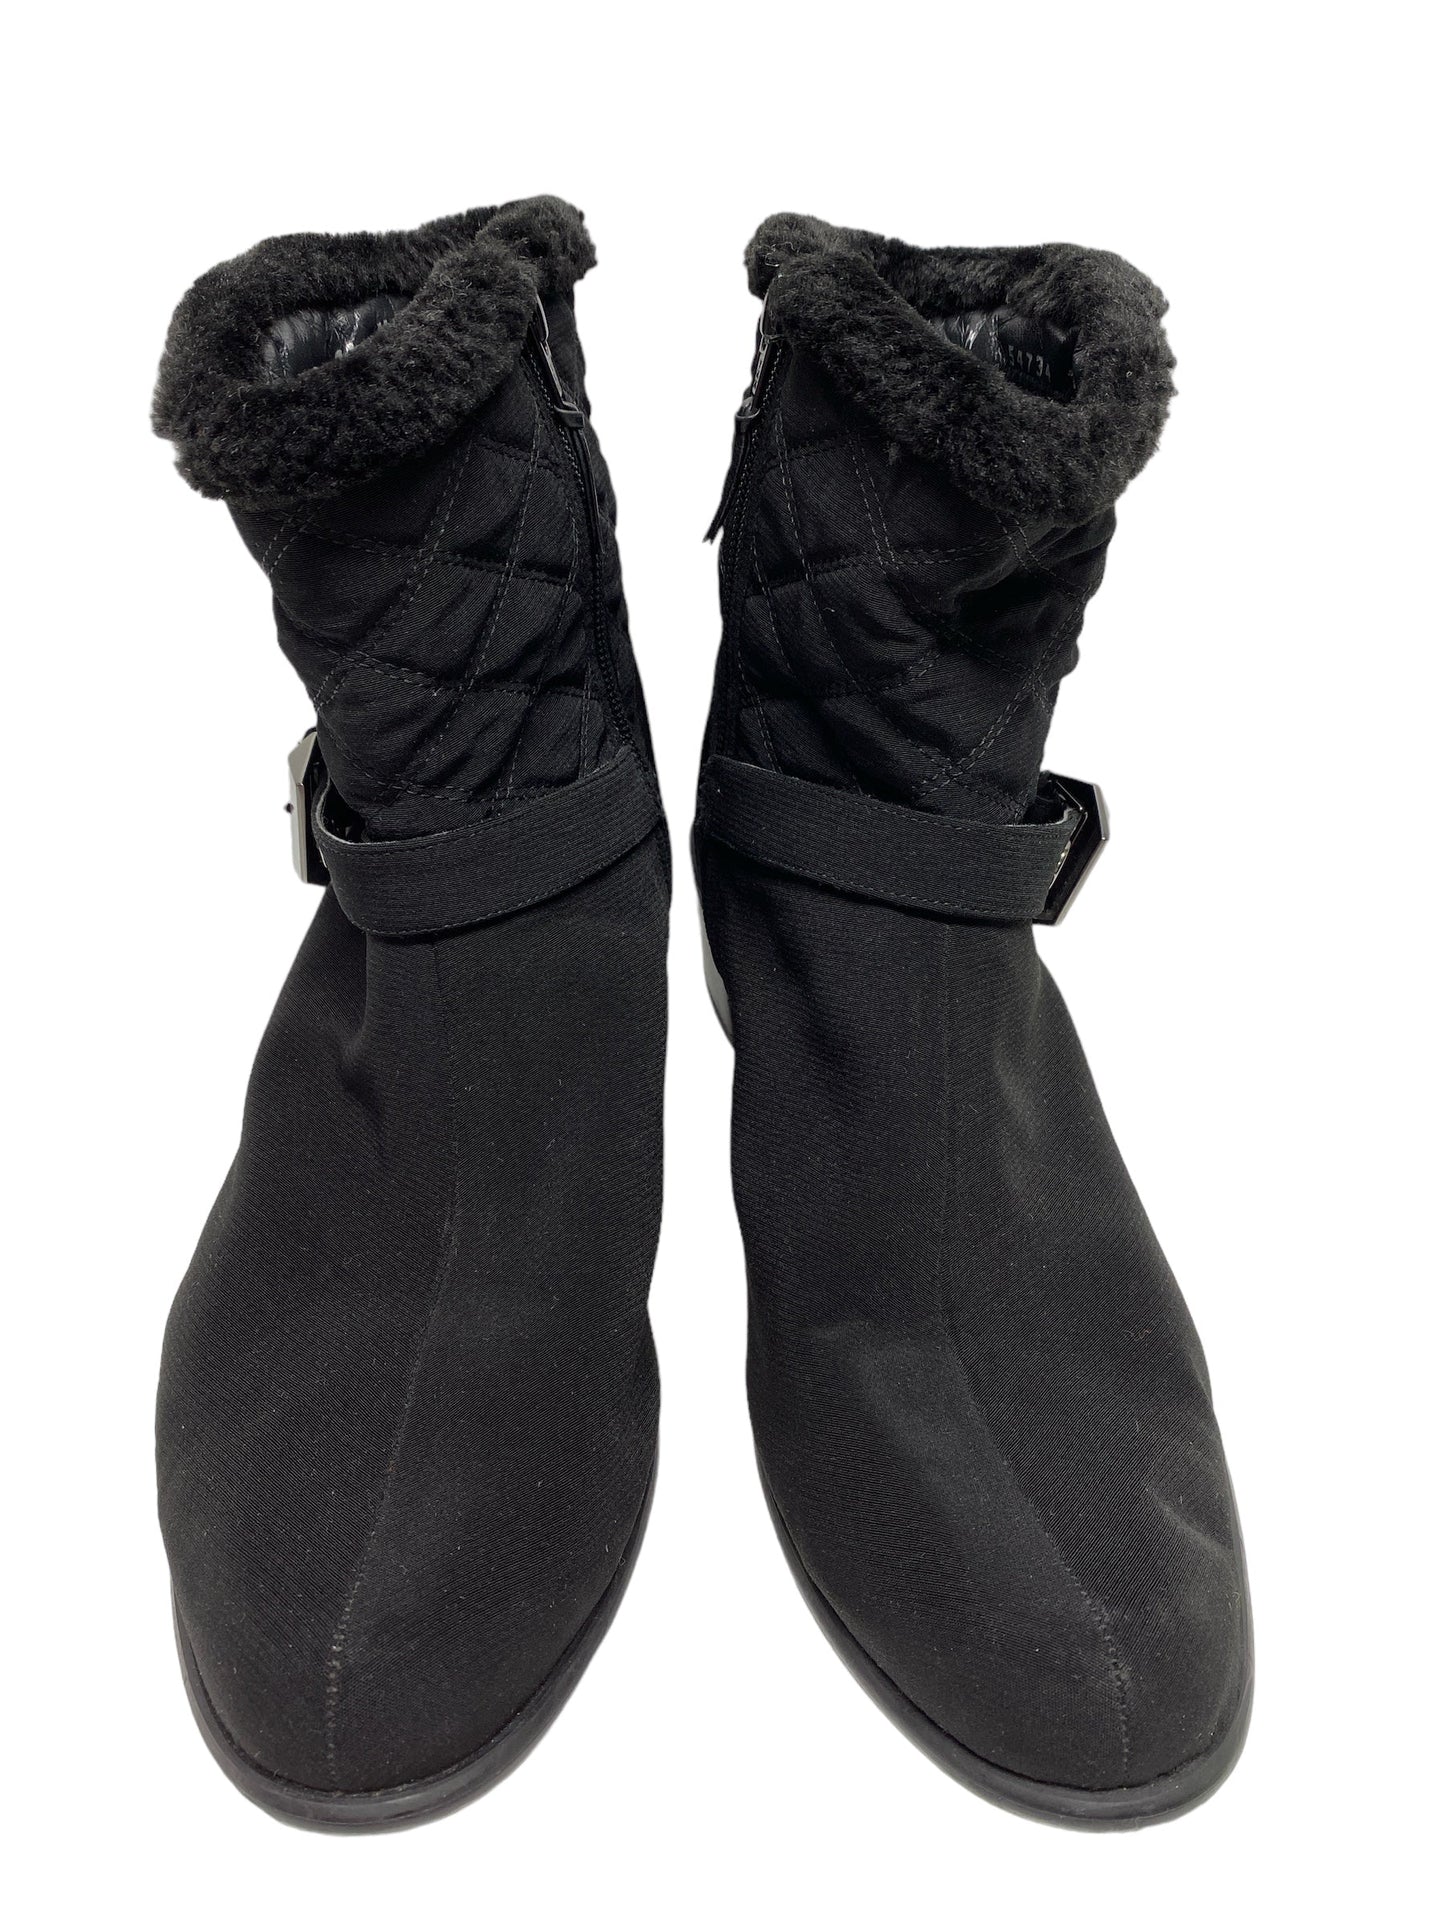 Boots Rain By Stuart Weitzman  Size: 11